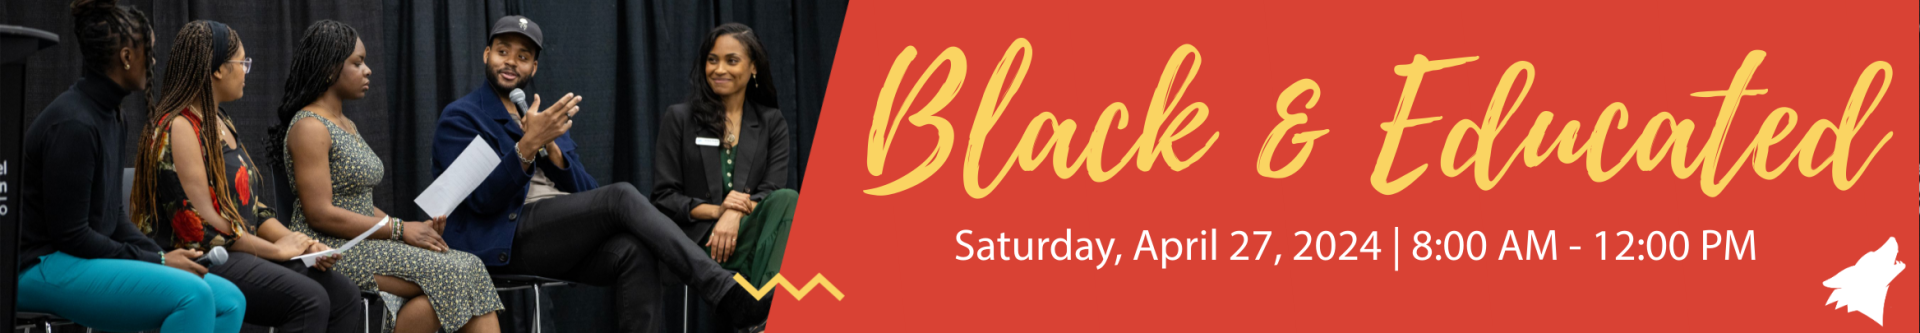 Black & Educated Saturday, April 27, 2024 | 8:00 AM - 12:00 PM